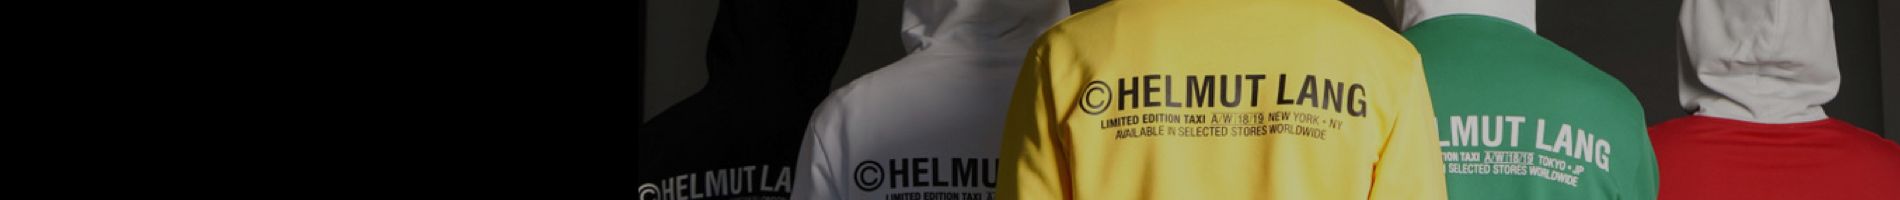 Helmut Lang Men's Blazers Banner